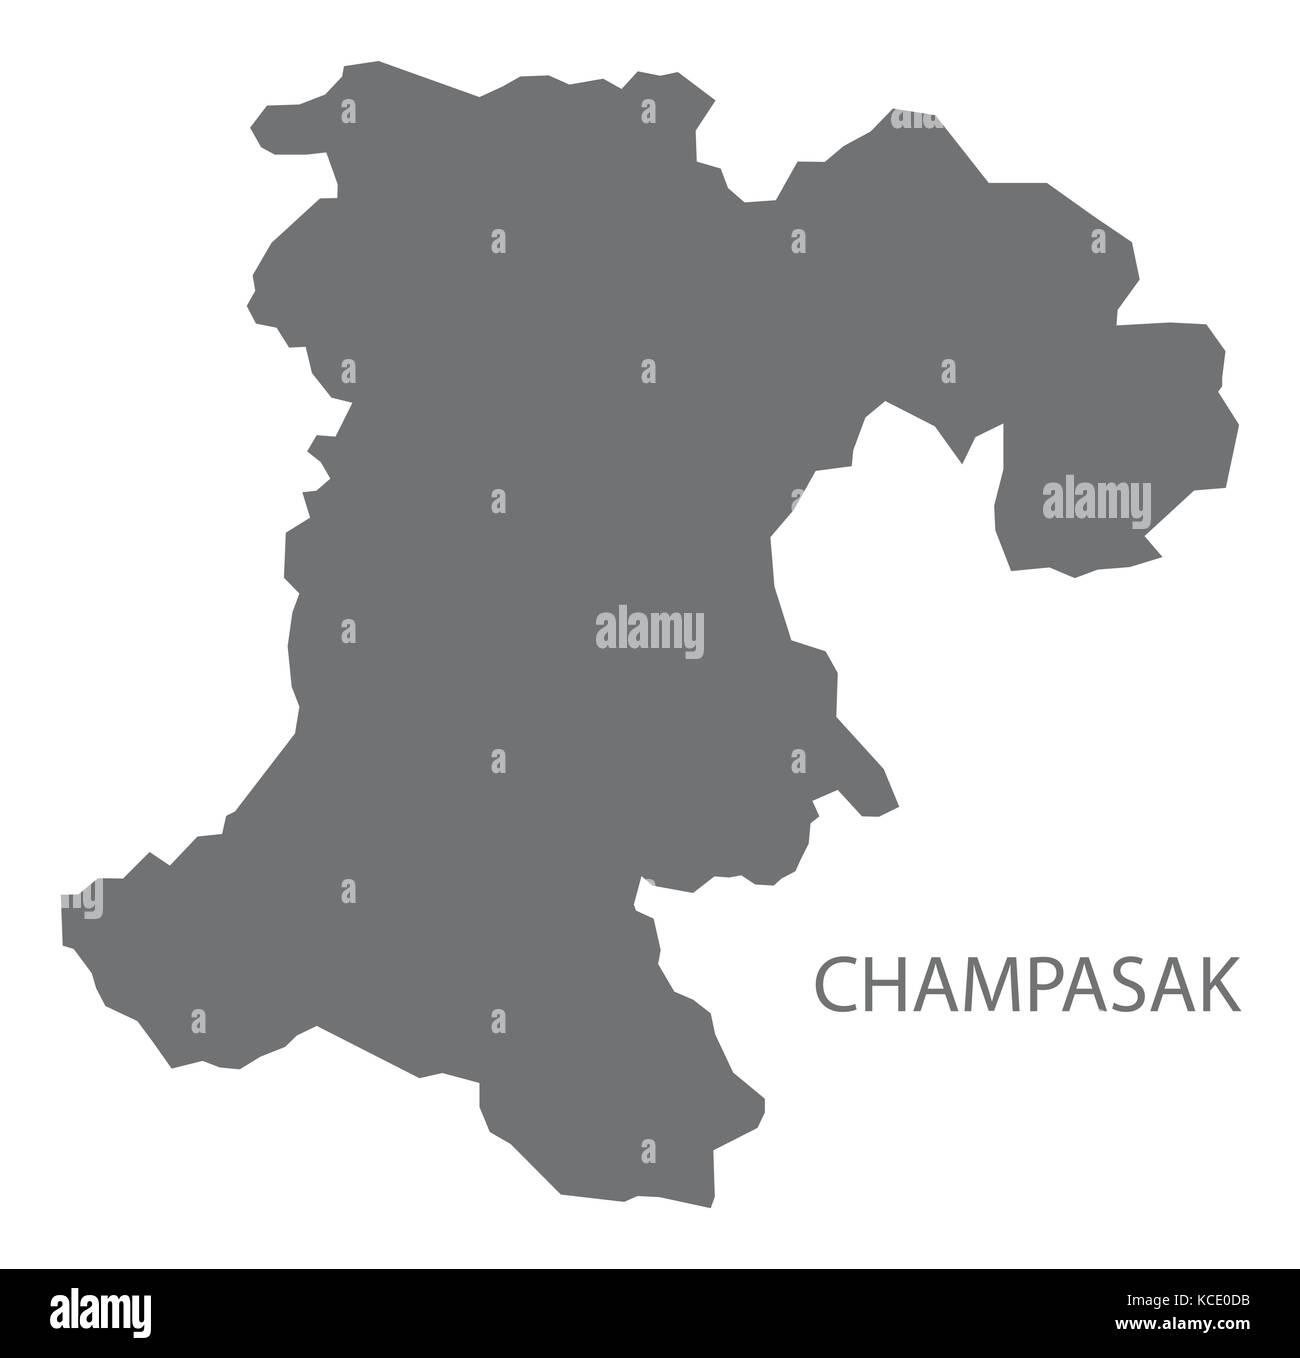 Champasak province map of Laos grey illustration silhouette shape Stock Vector